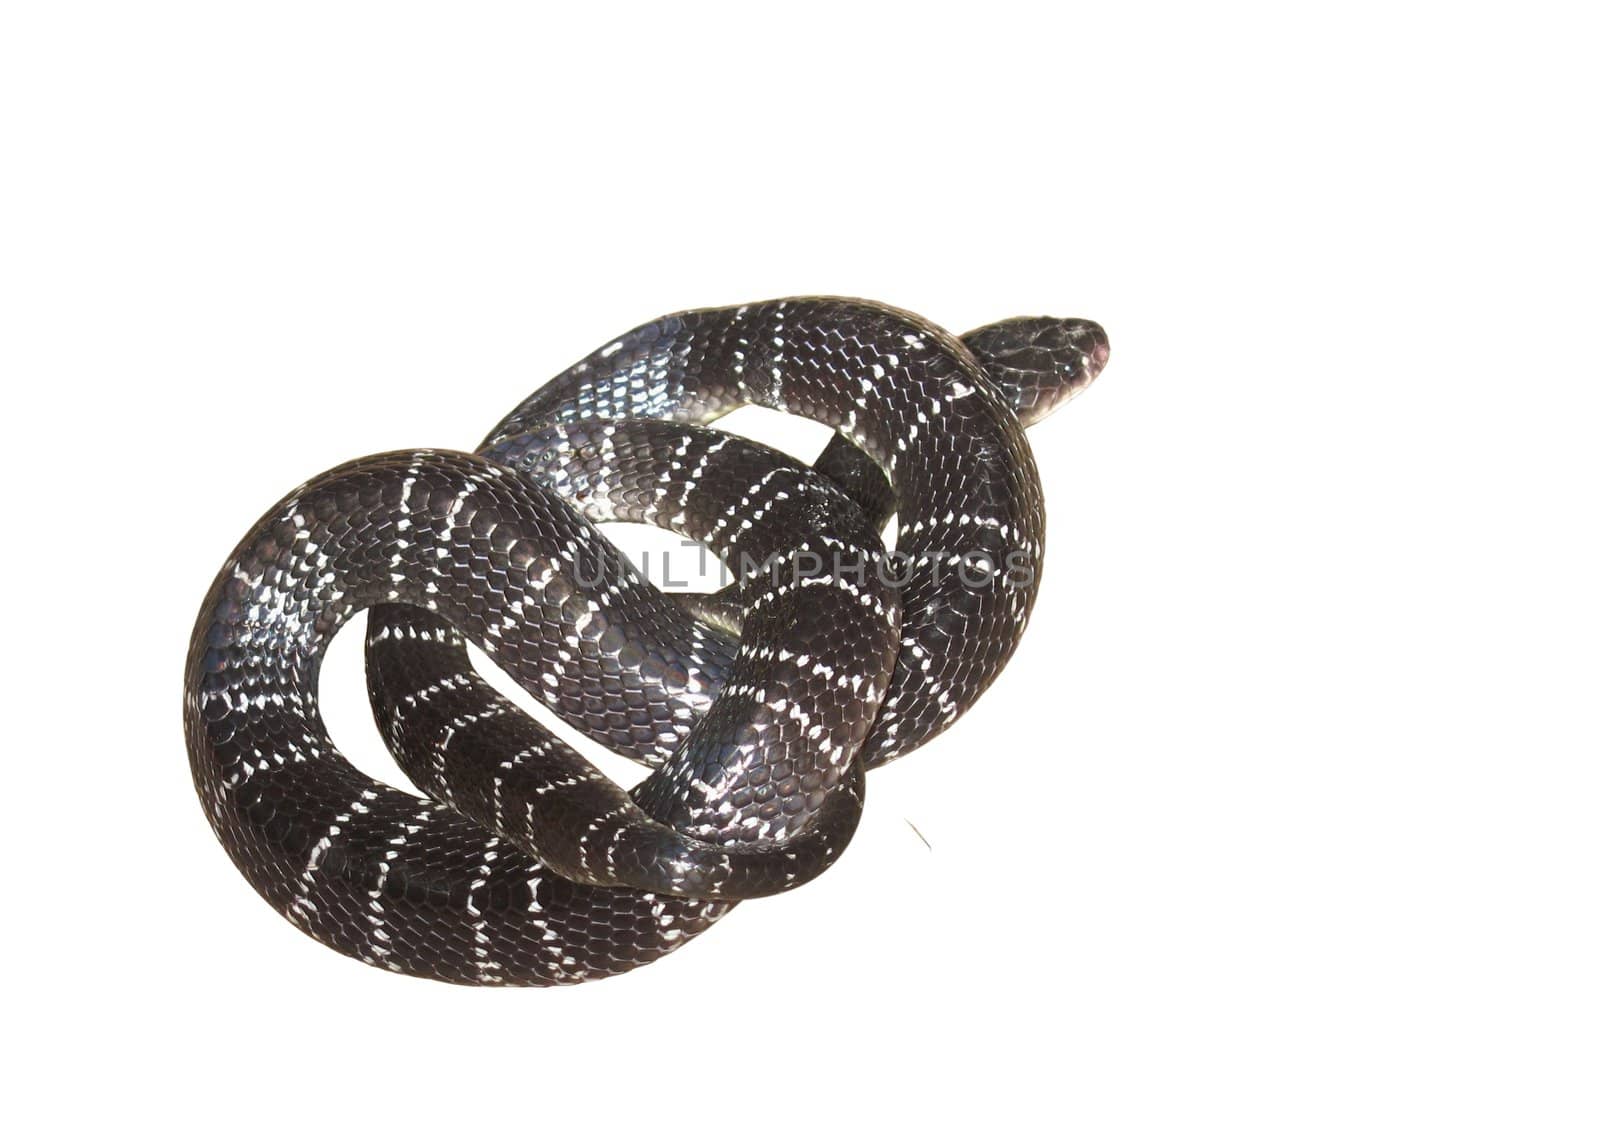 dangerous venomous snake krait by lkant